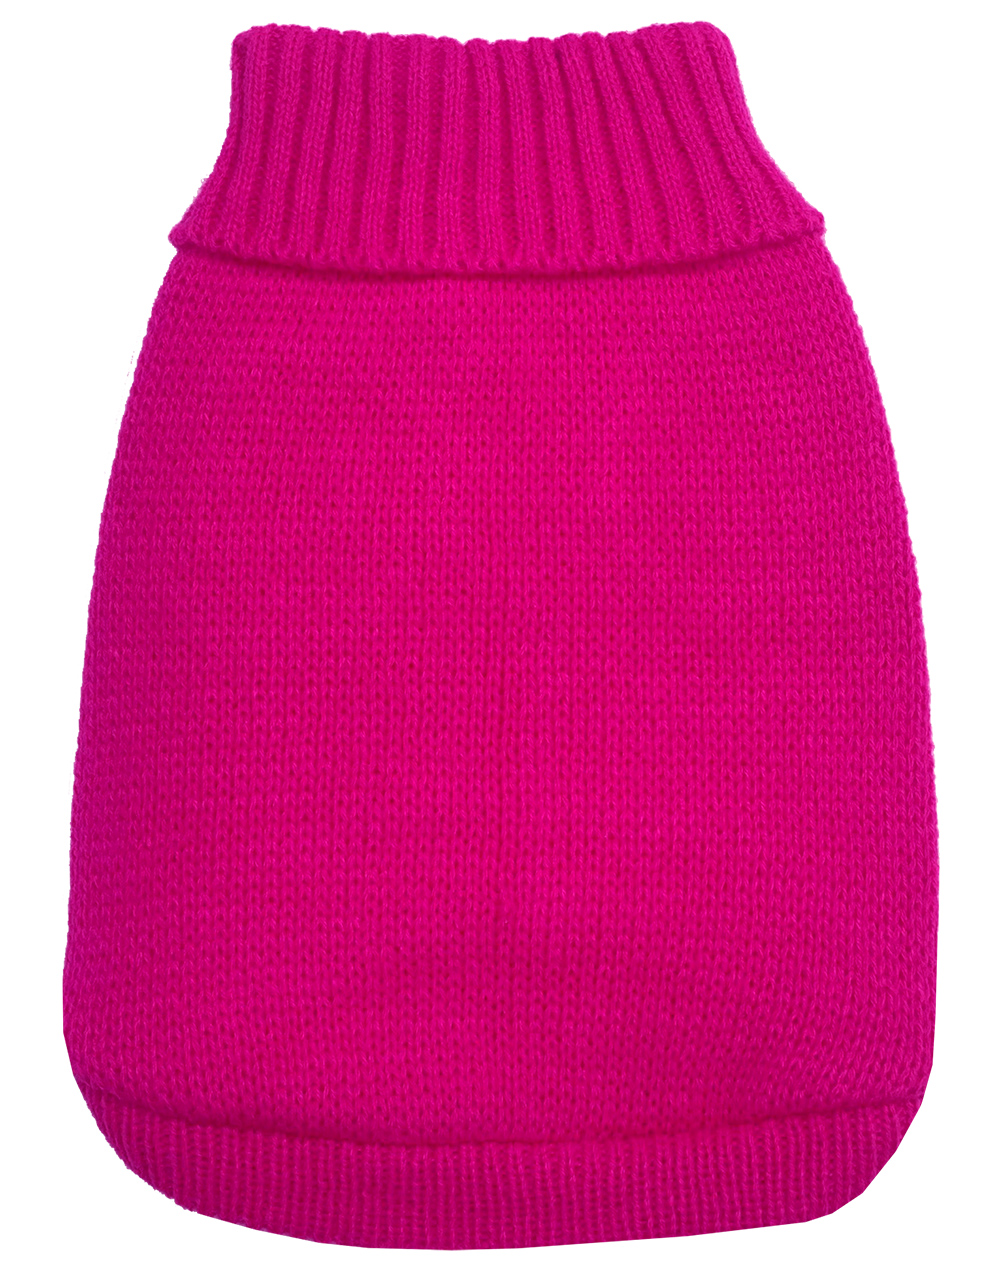 Knit Pet Sweater Bright Pink Size 5X